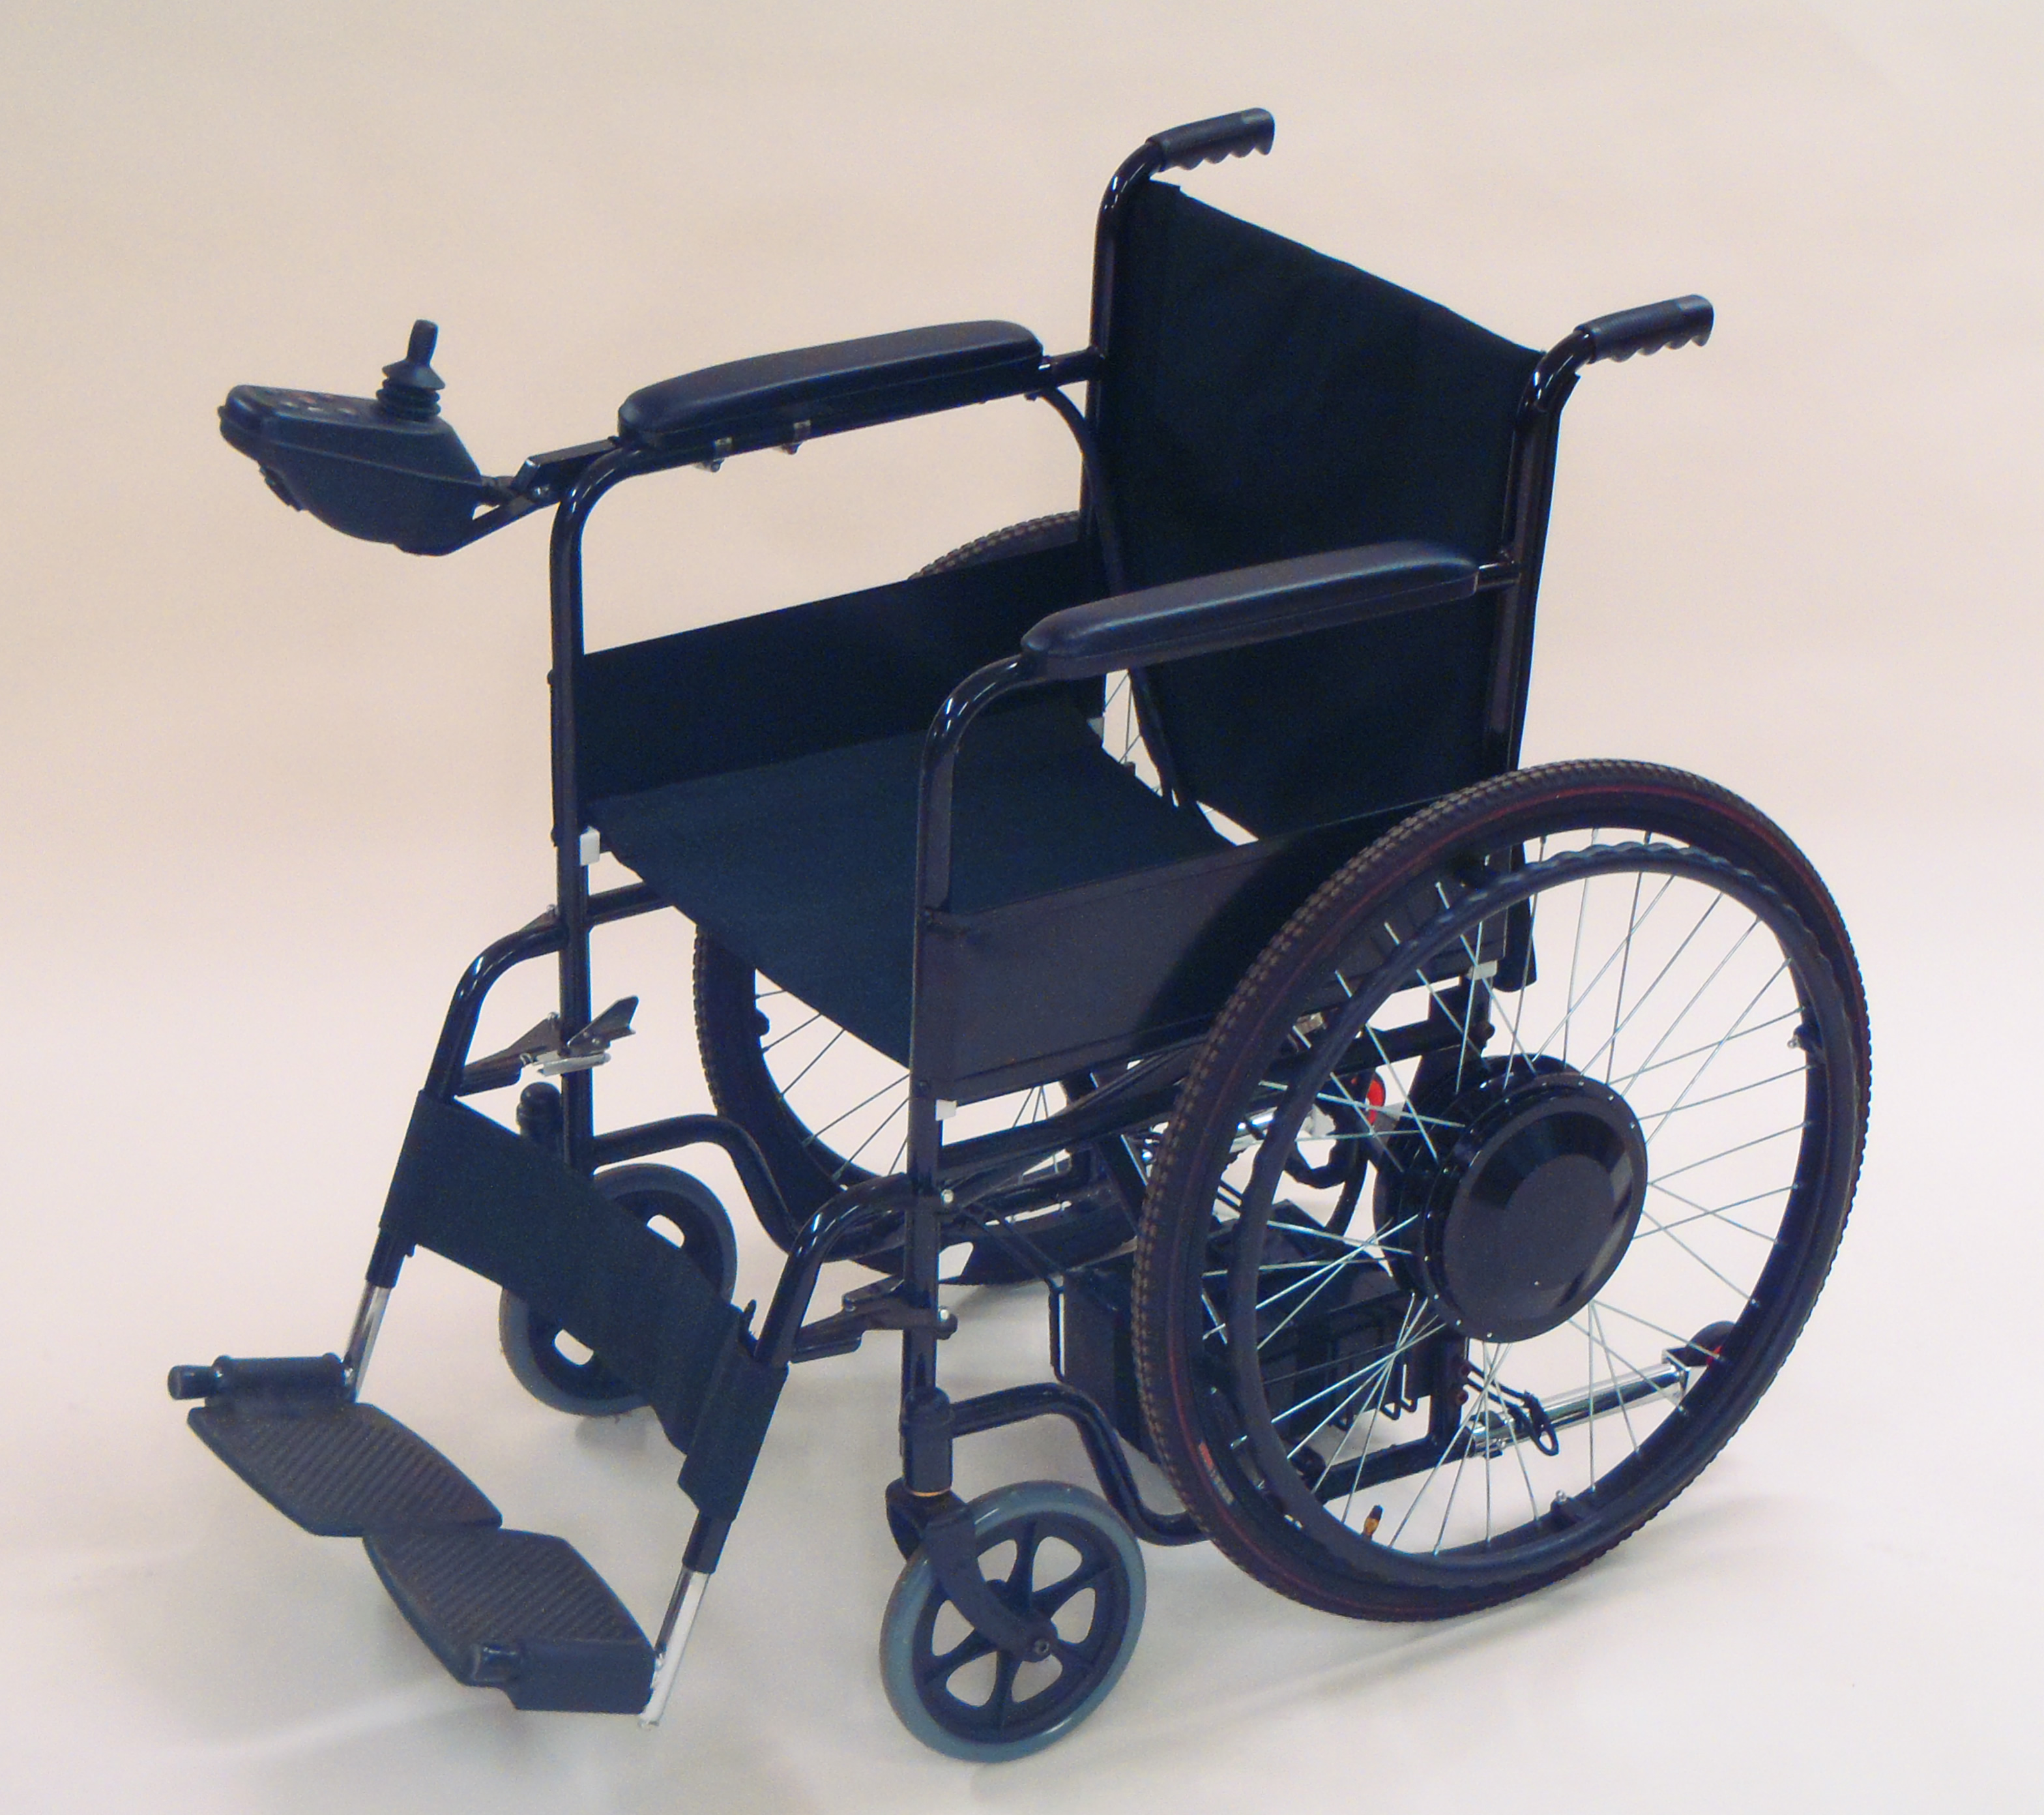 Hub Motor for Wheelchair